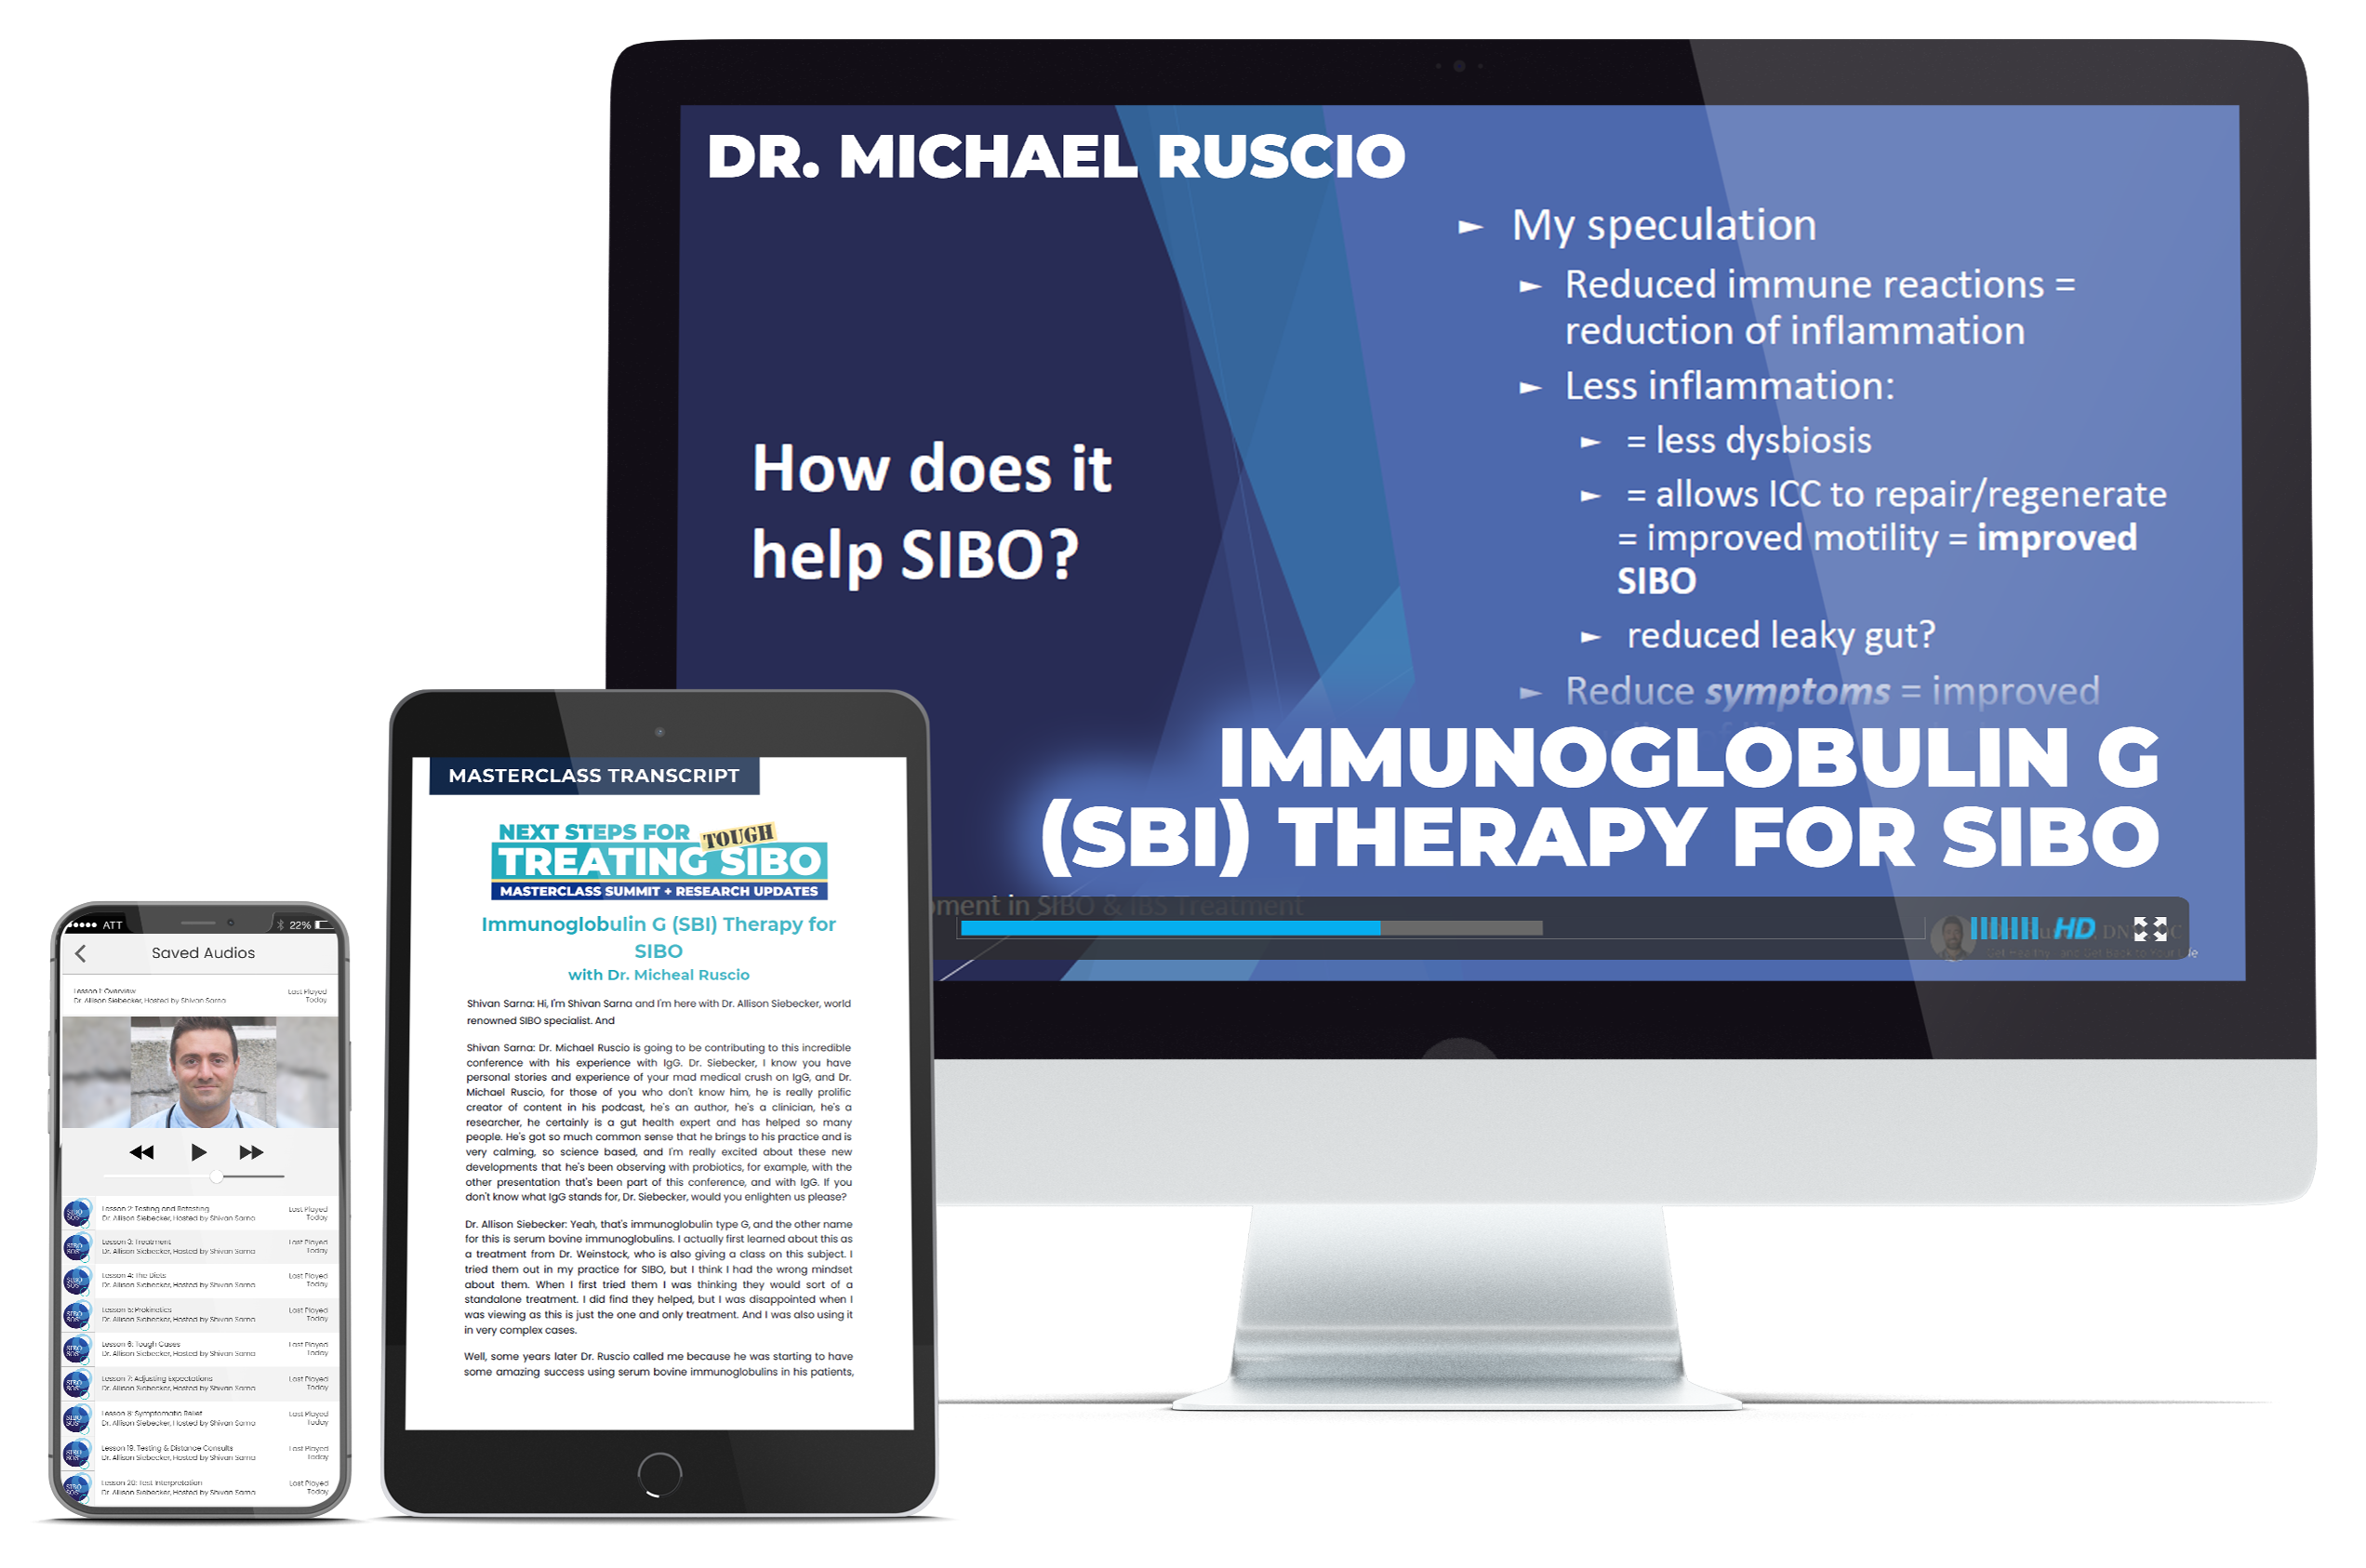 Immunoglobulin G (SBI) Therapy for SIBO​ with Dr. Michael Ruscio